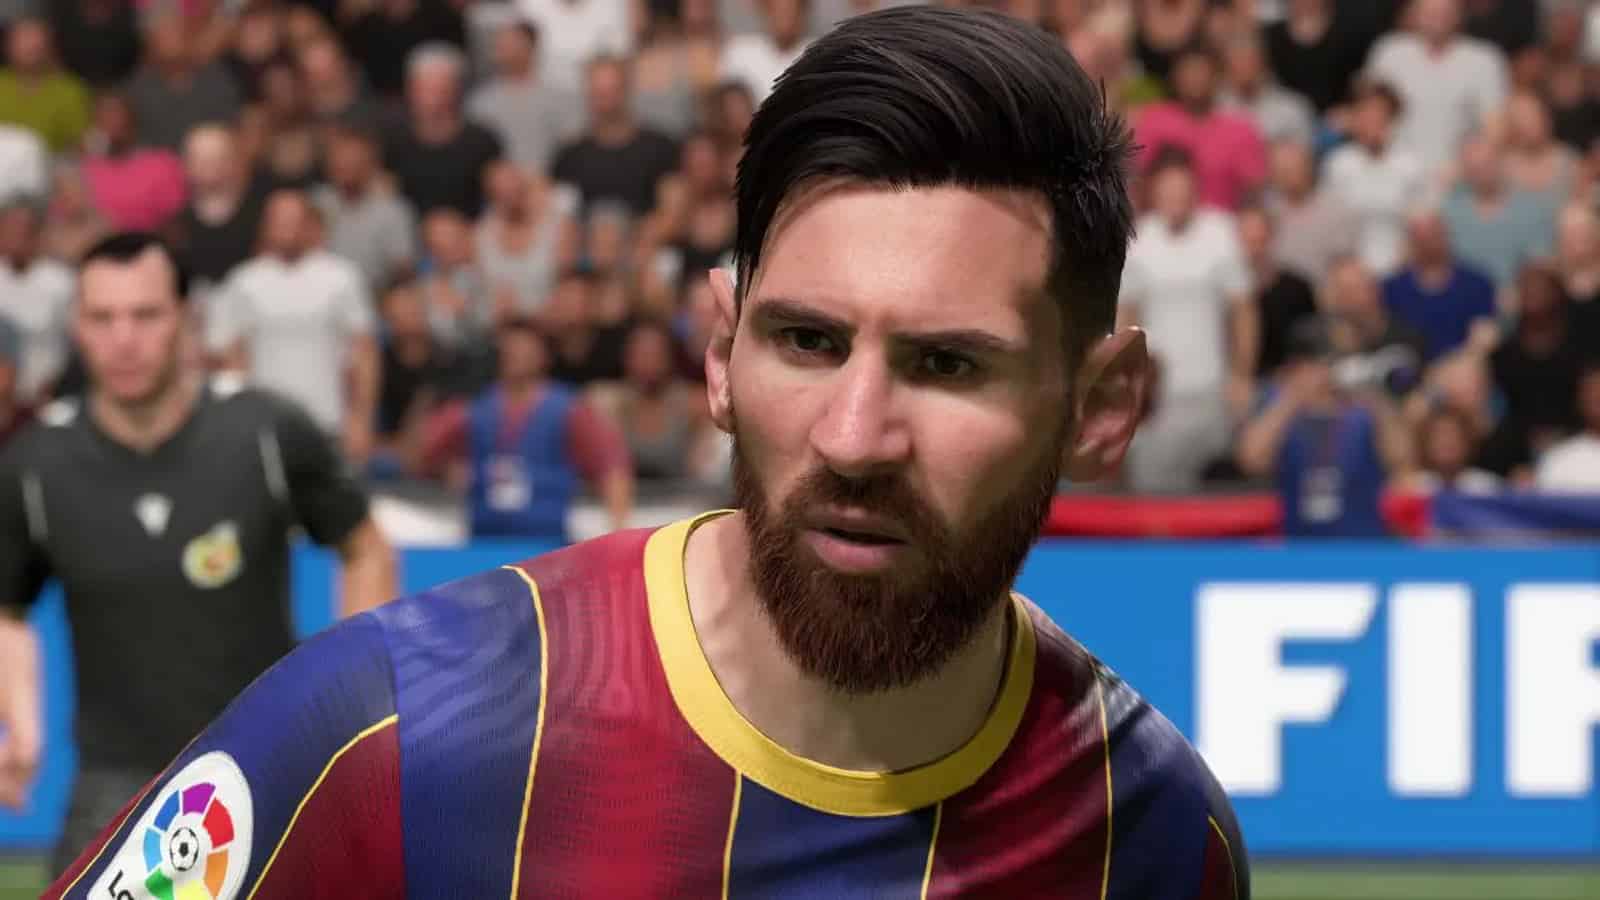 Meilleurs ailiers FIFA 22 dont Messi